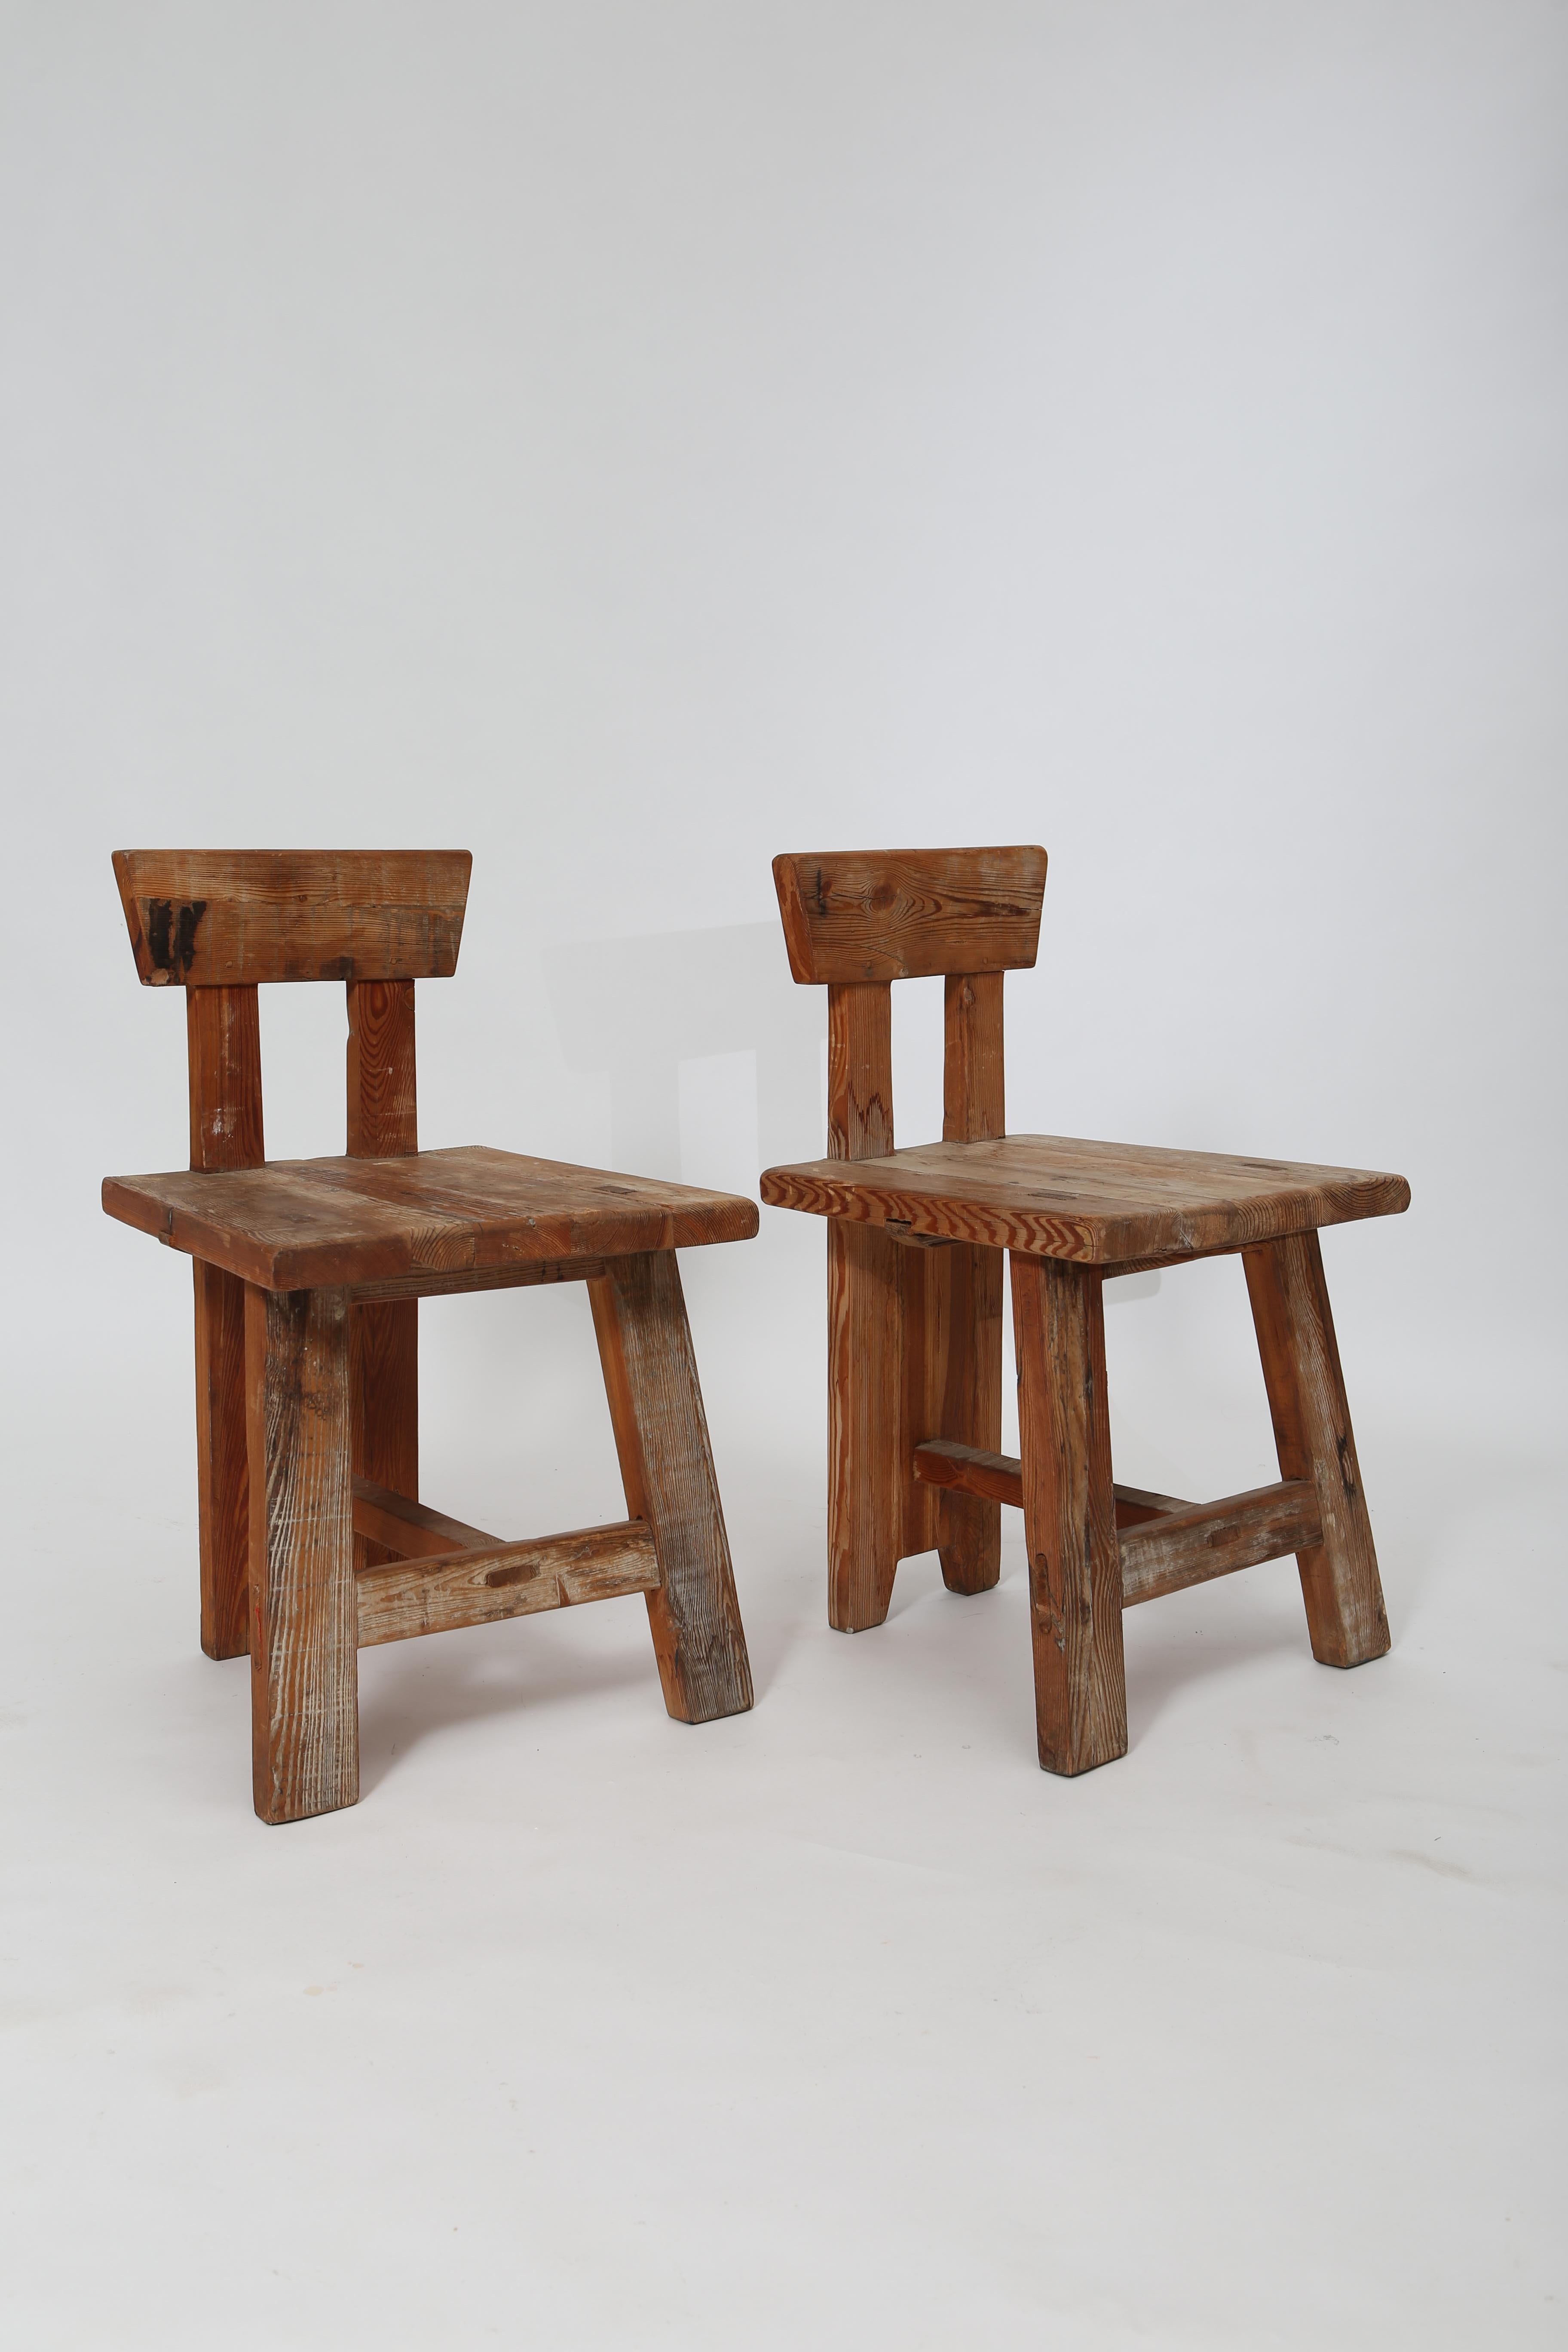 Folk Art Modernist Pine Chairs, a Pair